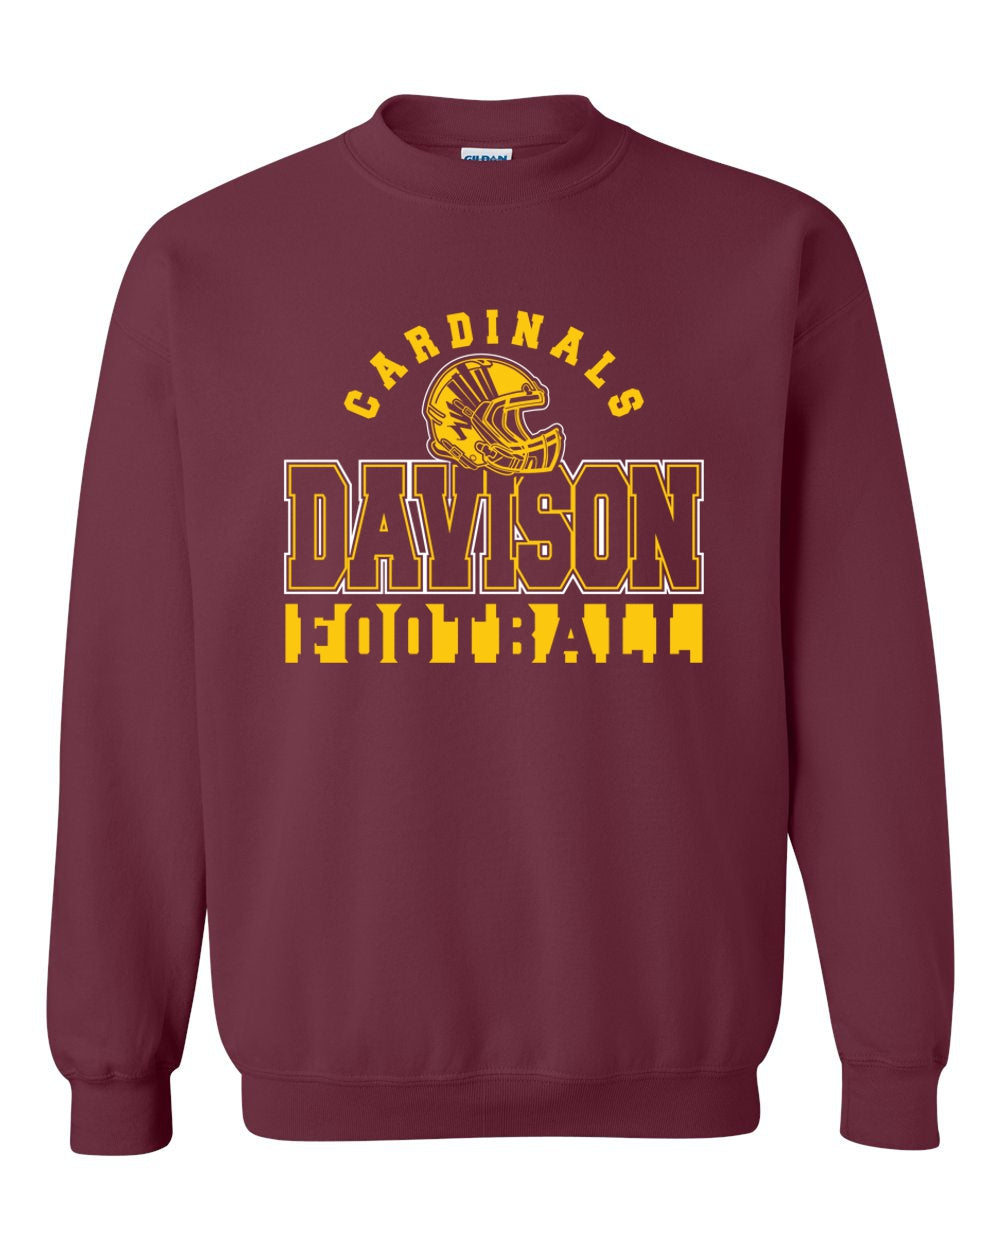 Davison Cardinals Football Sweatshirt